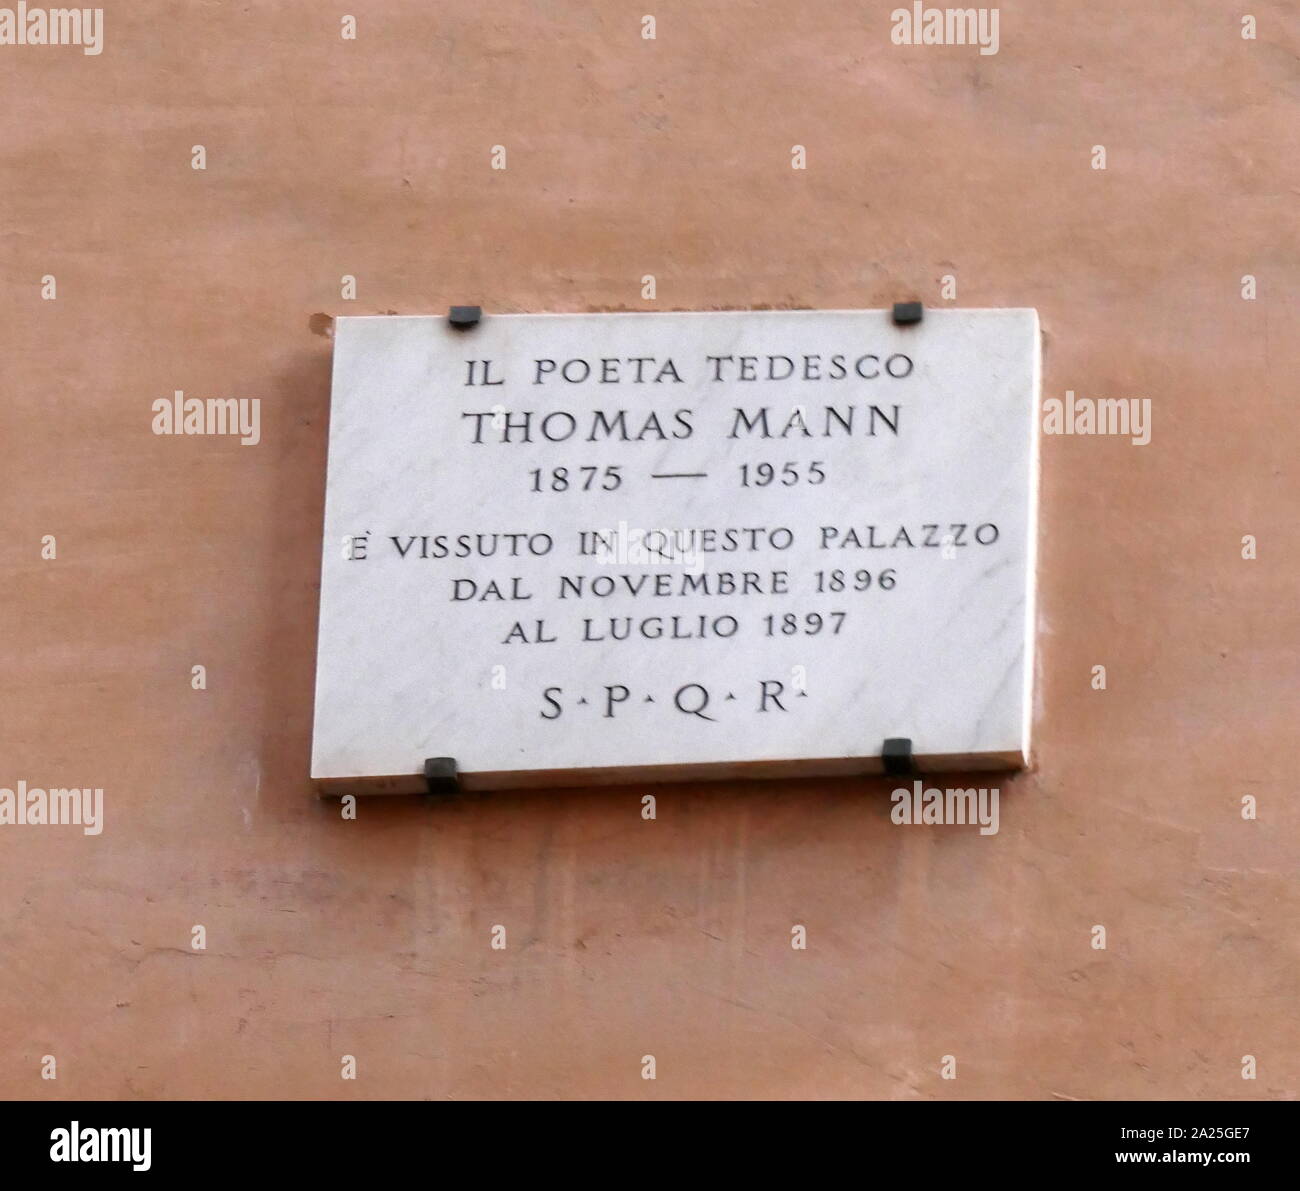 Plaque commemorating Thomas Mann (1875-1955) a German novelist, short story writer, social critic, philanthropist, essayist, and the 1929 Nobel Prize in Literature laureate. Stock Photo